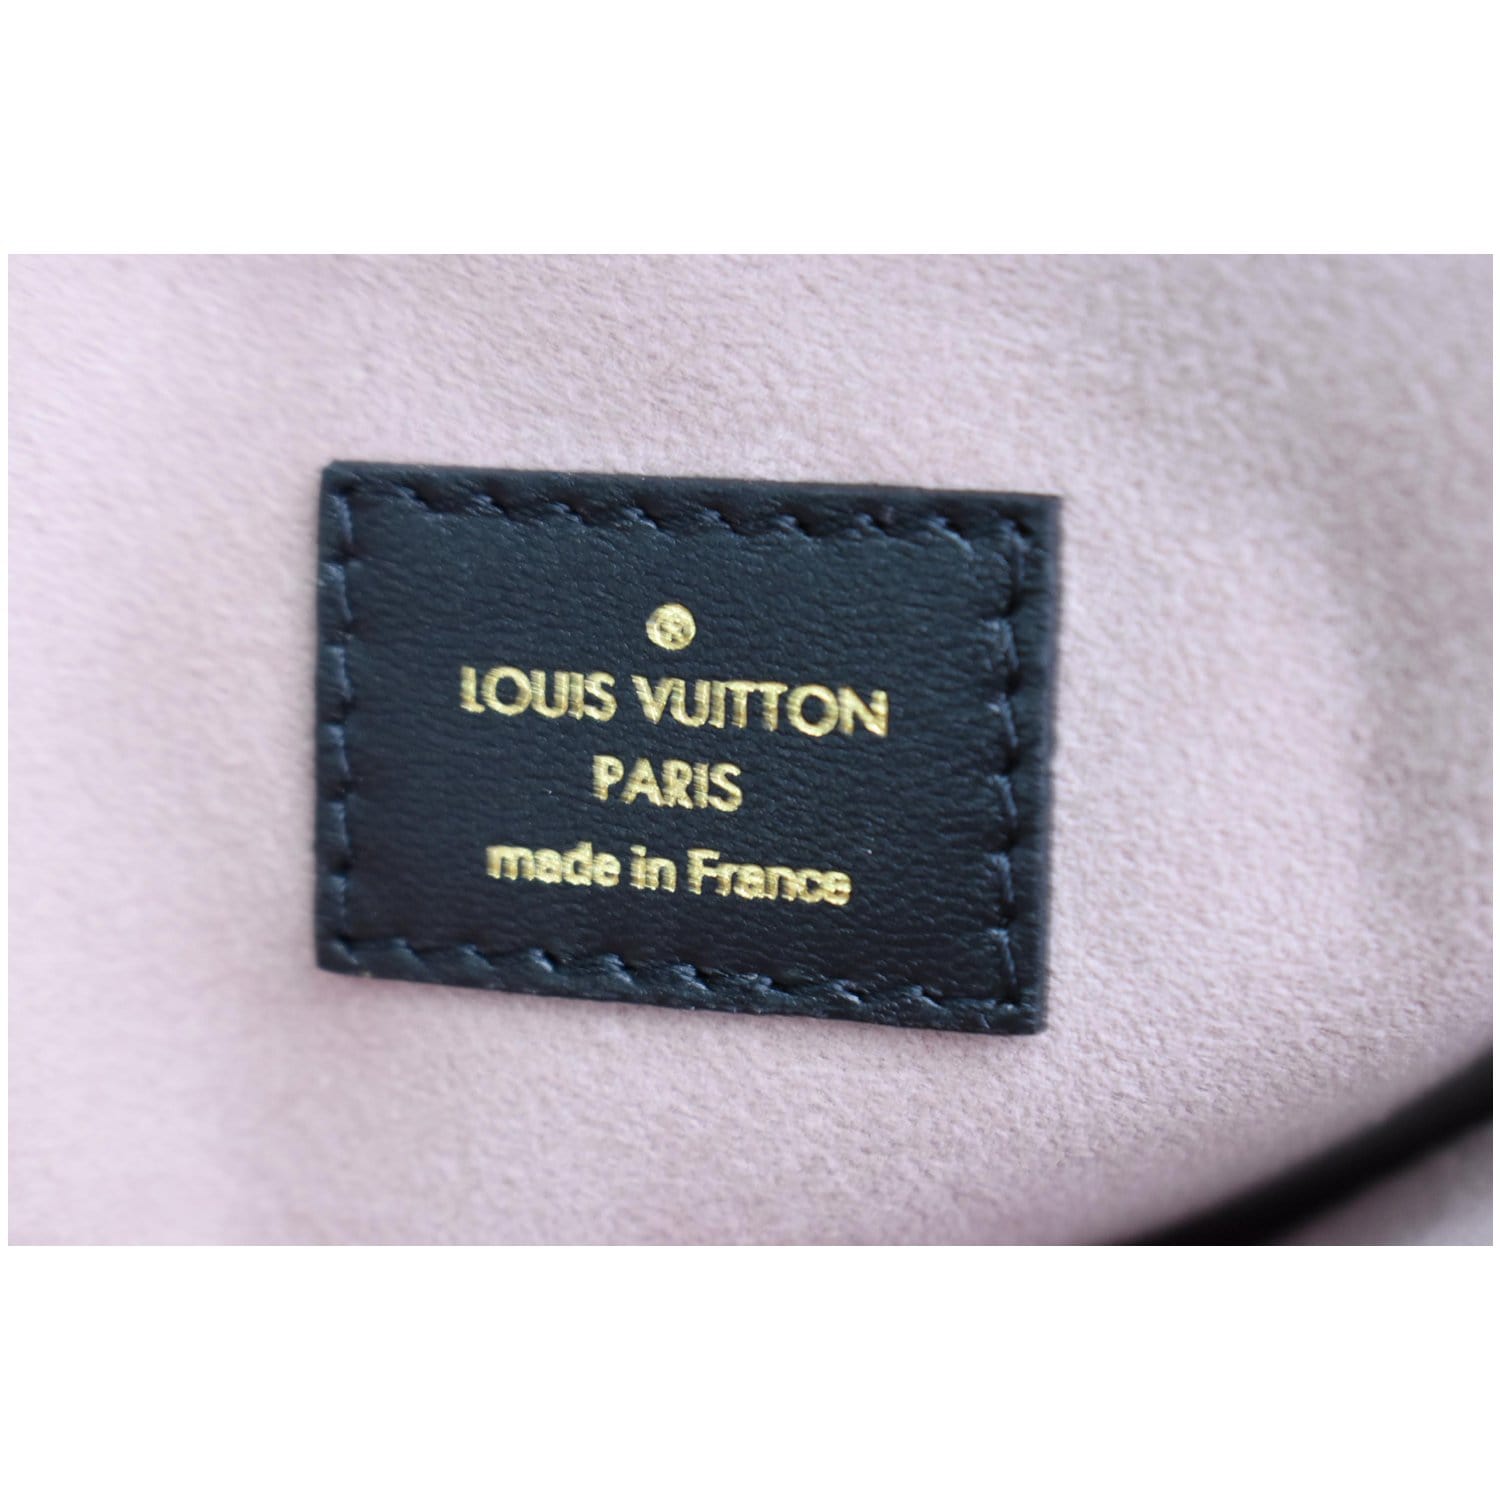 Louis Vuitton Monogram Embossed Empreinte Coussin PM w/ Strap